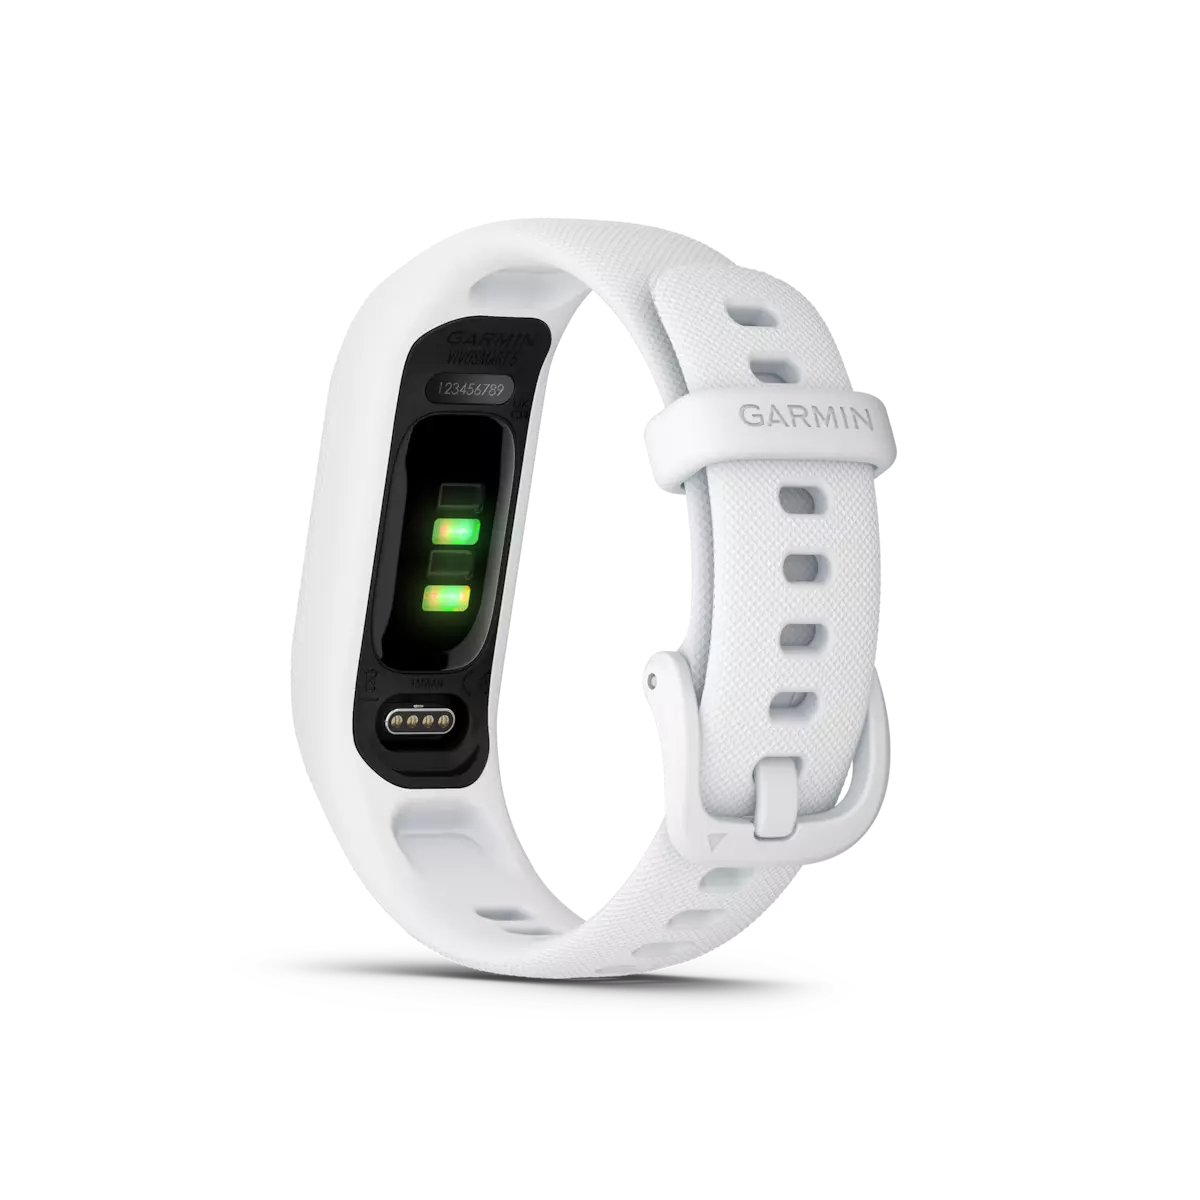 Garmin Vivosmart 5 Smart Fitness and Health Activity Tracker